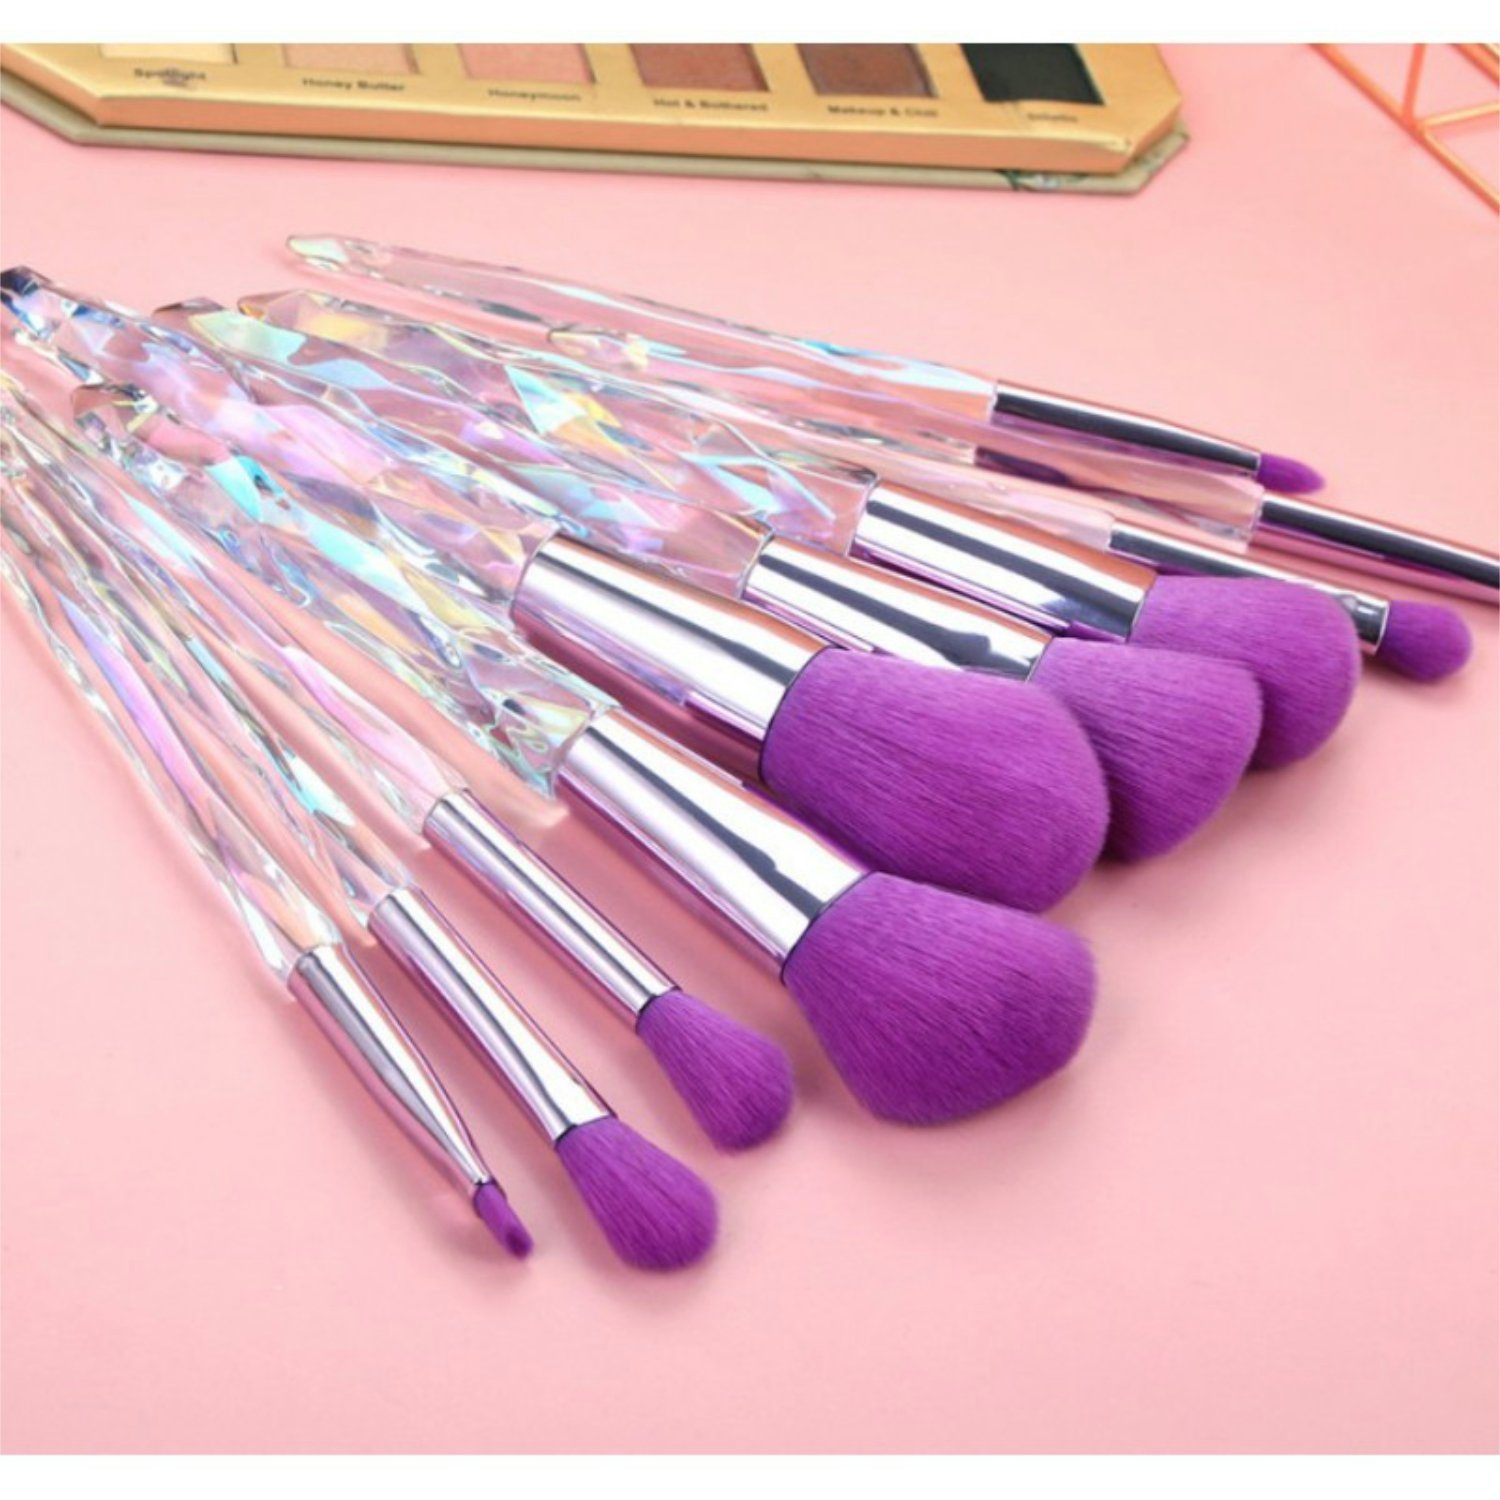 Kosmetikpinsel-Set Brushes, 10 10-teiliges Make-Up-Pinsel WS-Trend